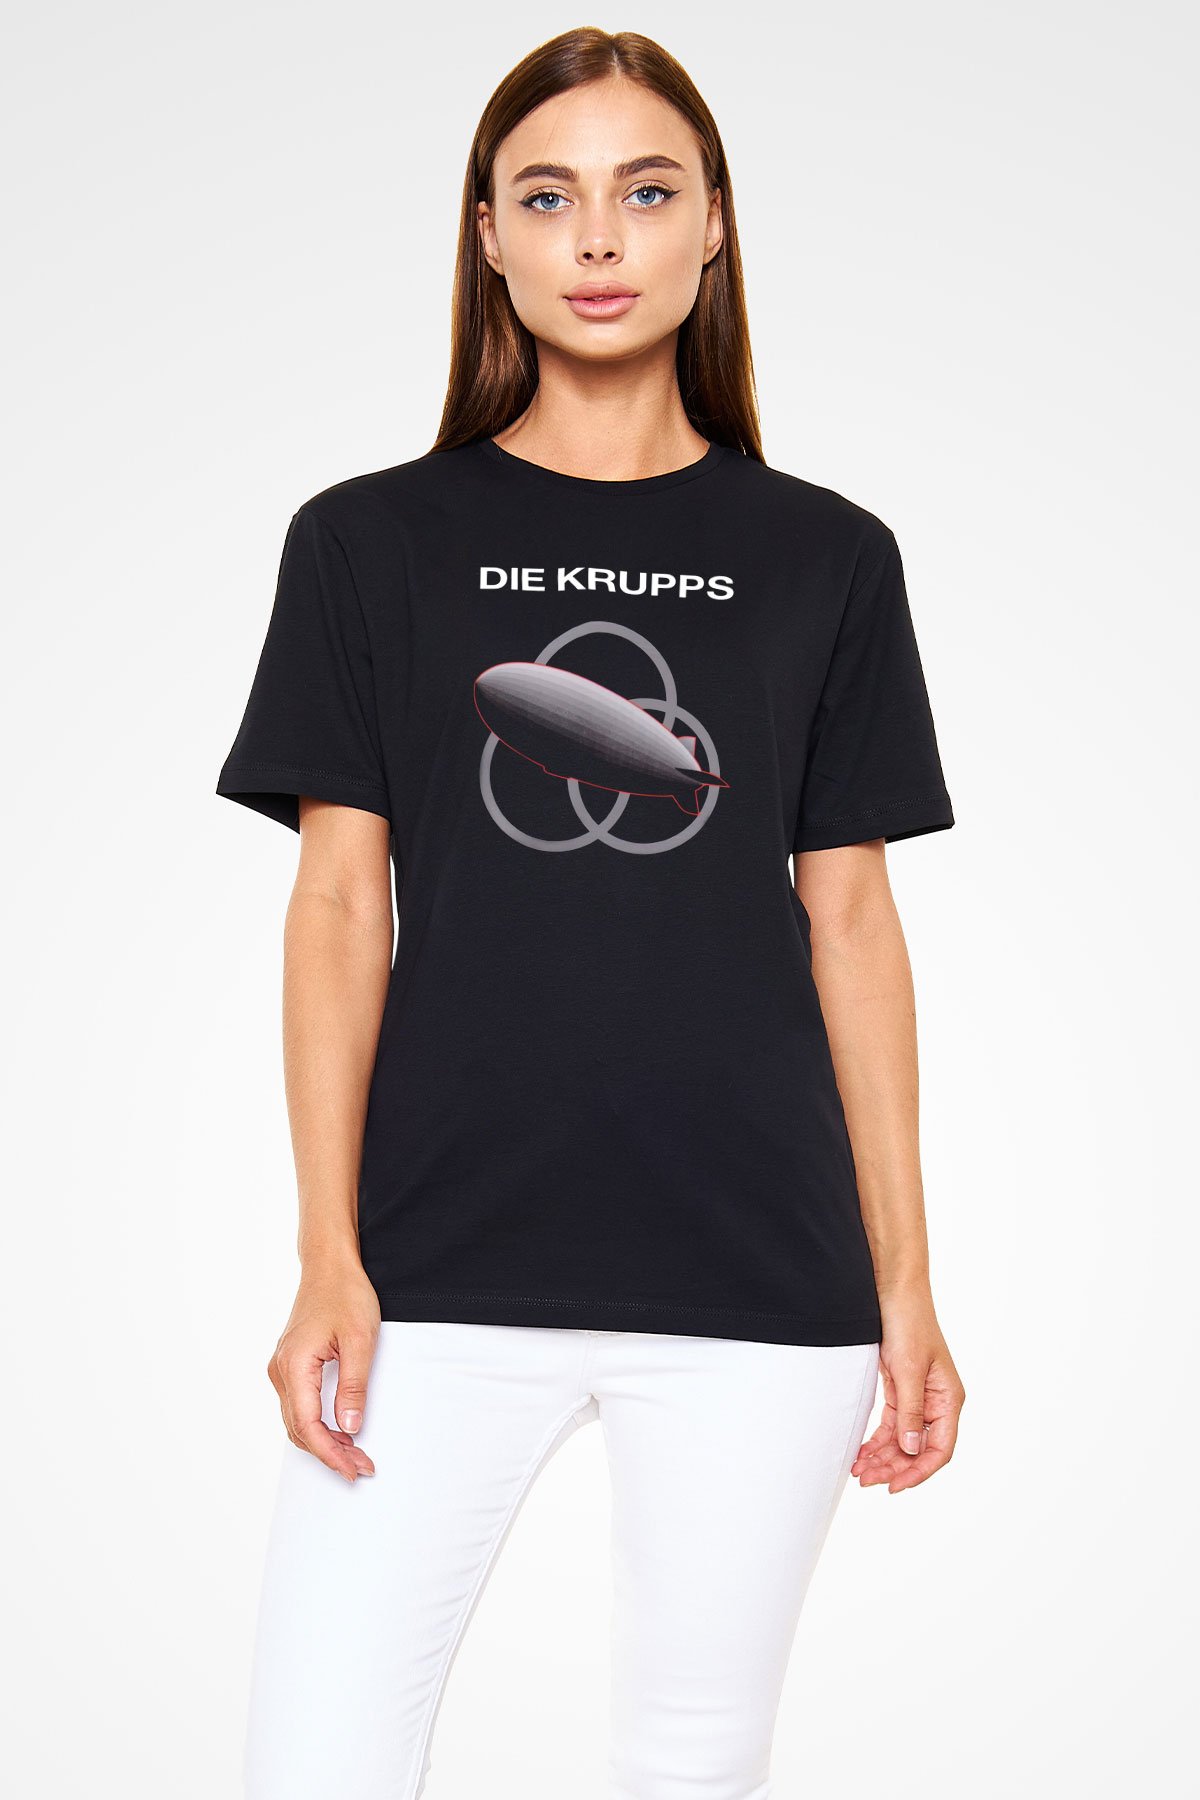 Die Krupps Black Unisex T-Shirt - Tees - Shirts